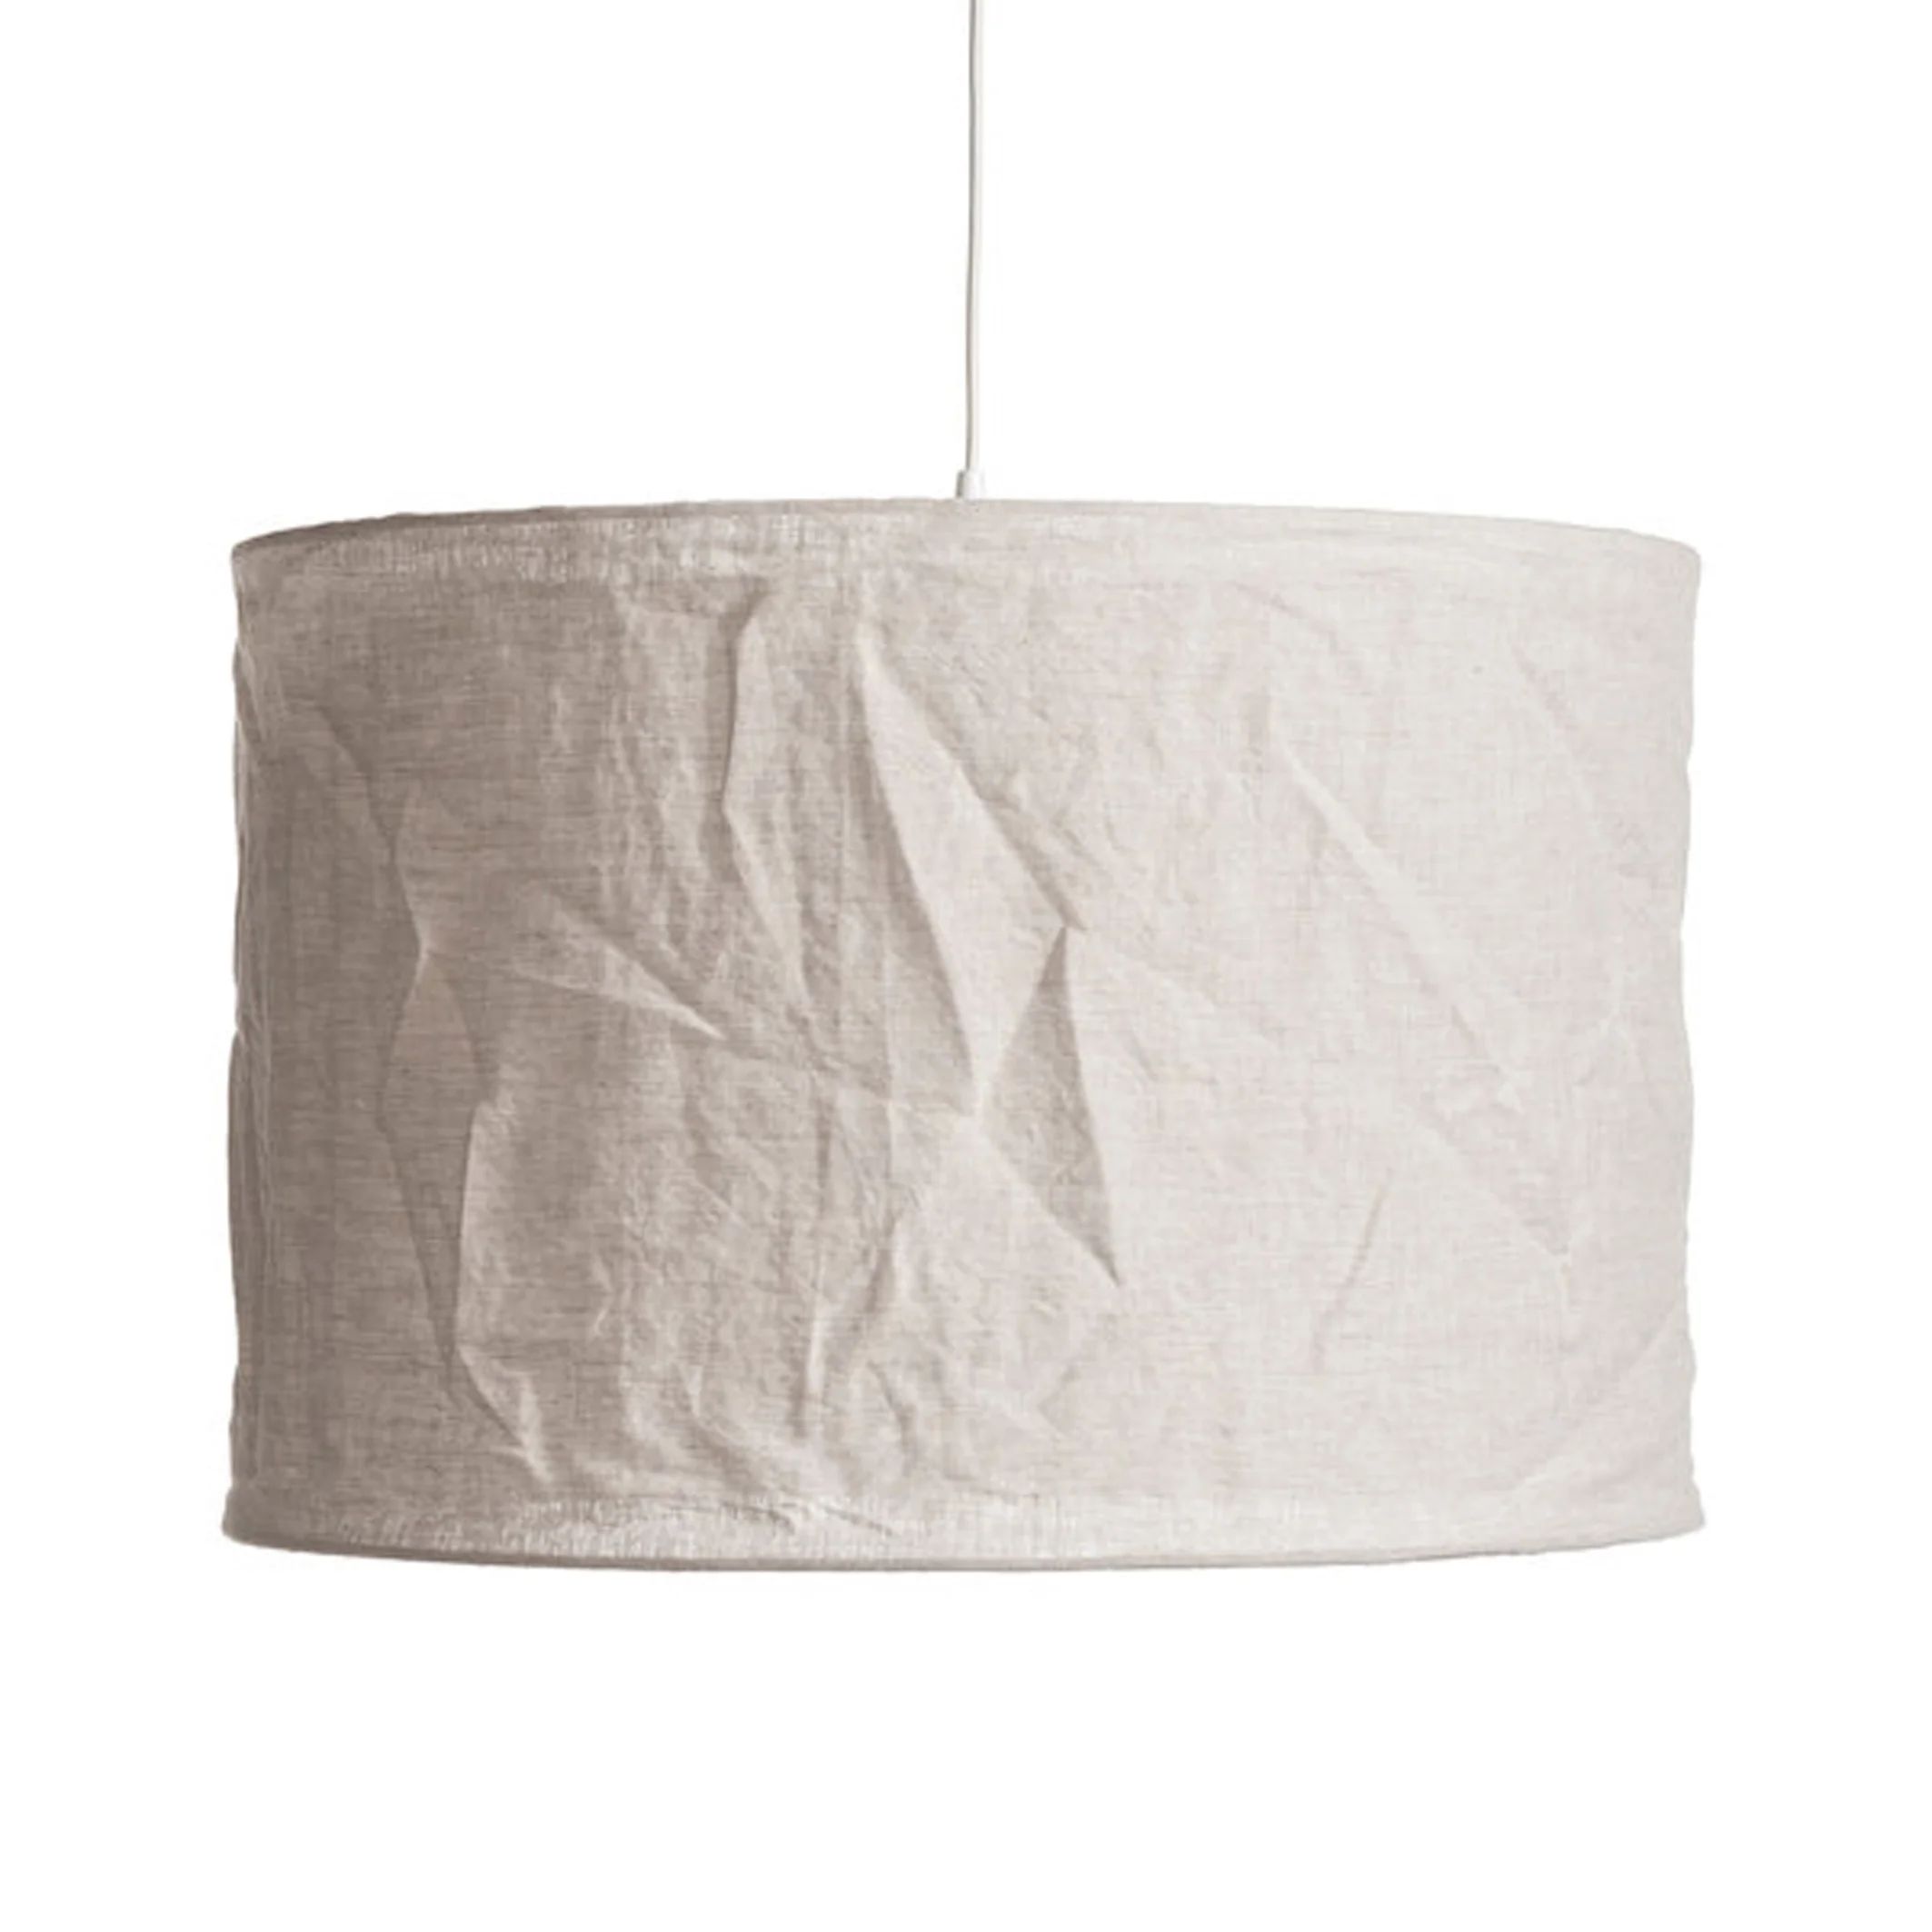 Thad 30cm Diameter Textured Linen Ceiling Lampshade | La Redoute (UK)